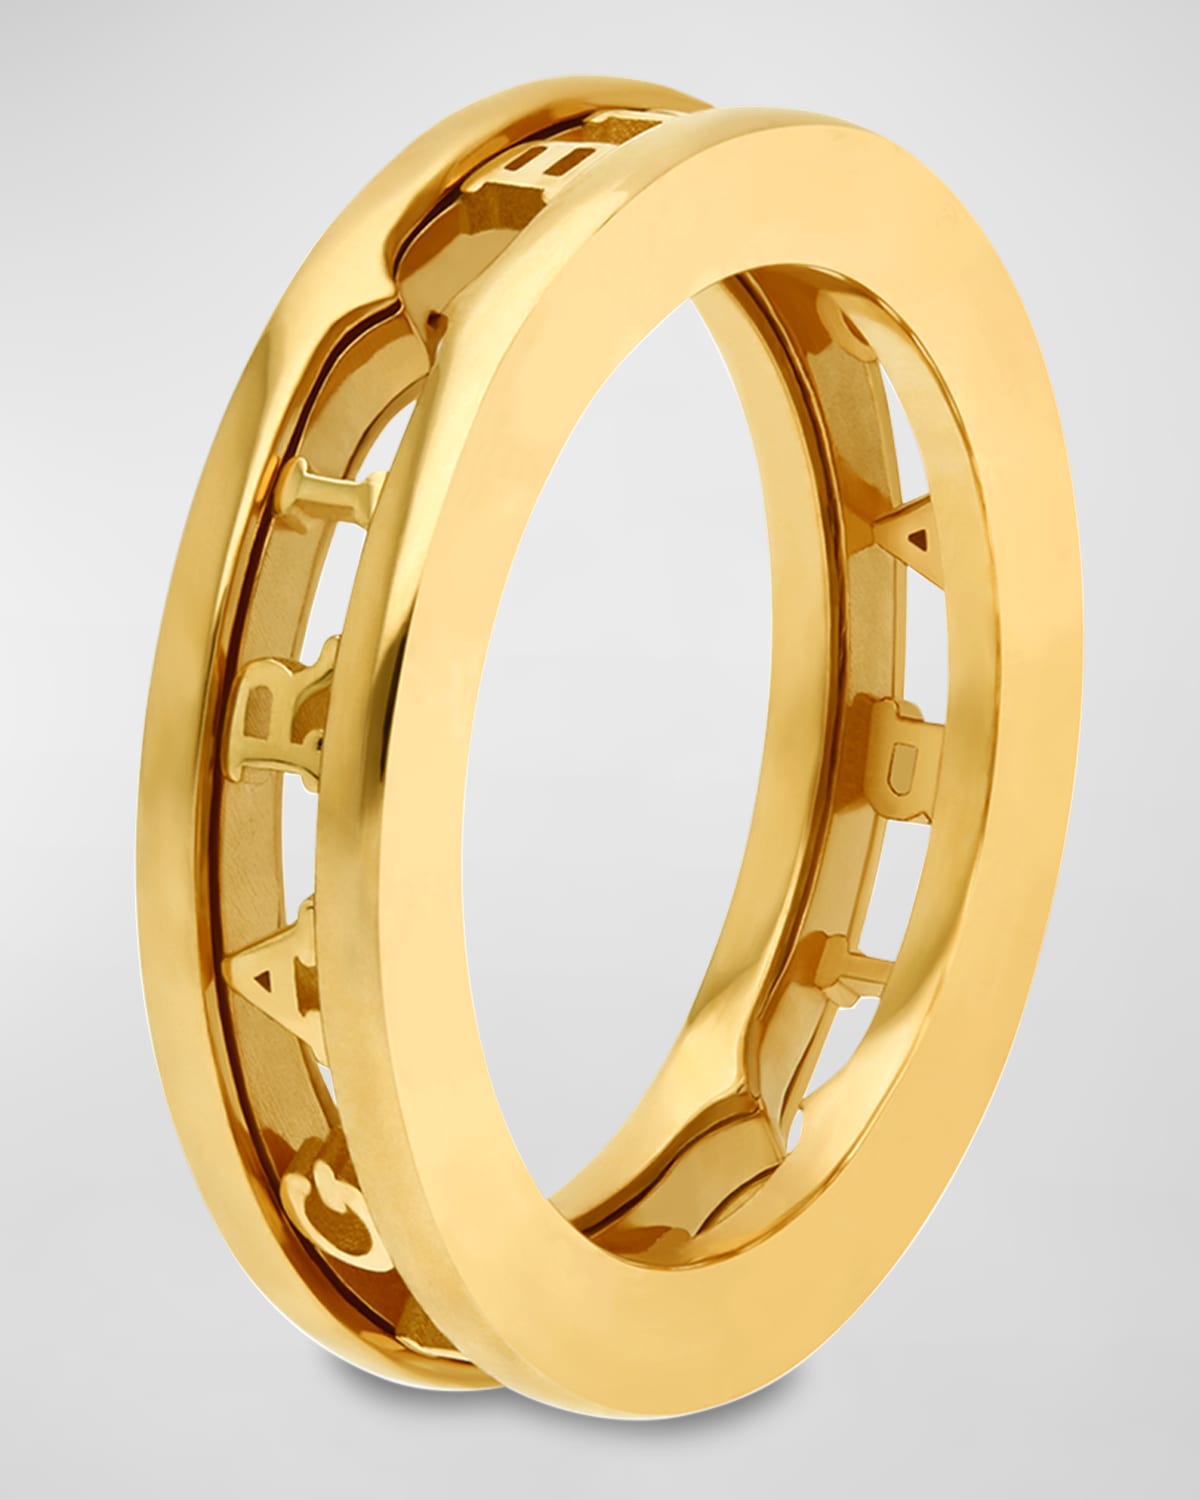 Estate Art Deco Two-Stone Diamond Engagement Ring, Size 7